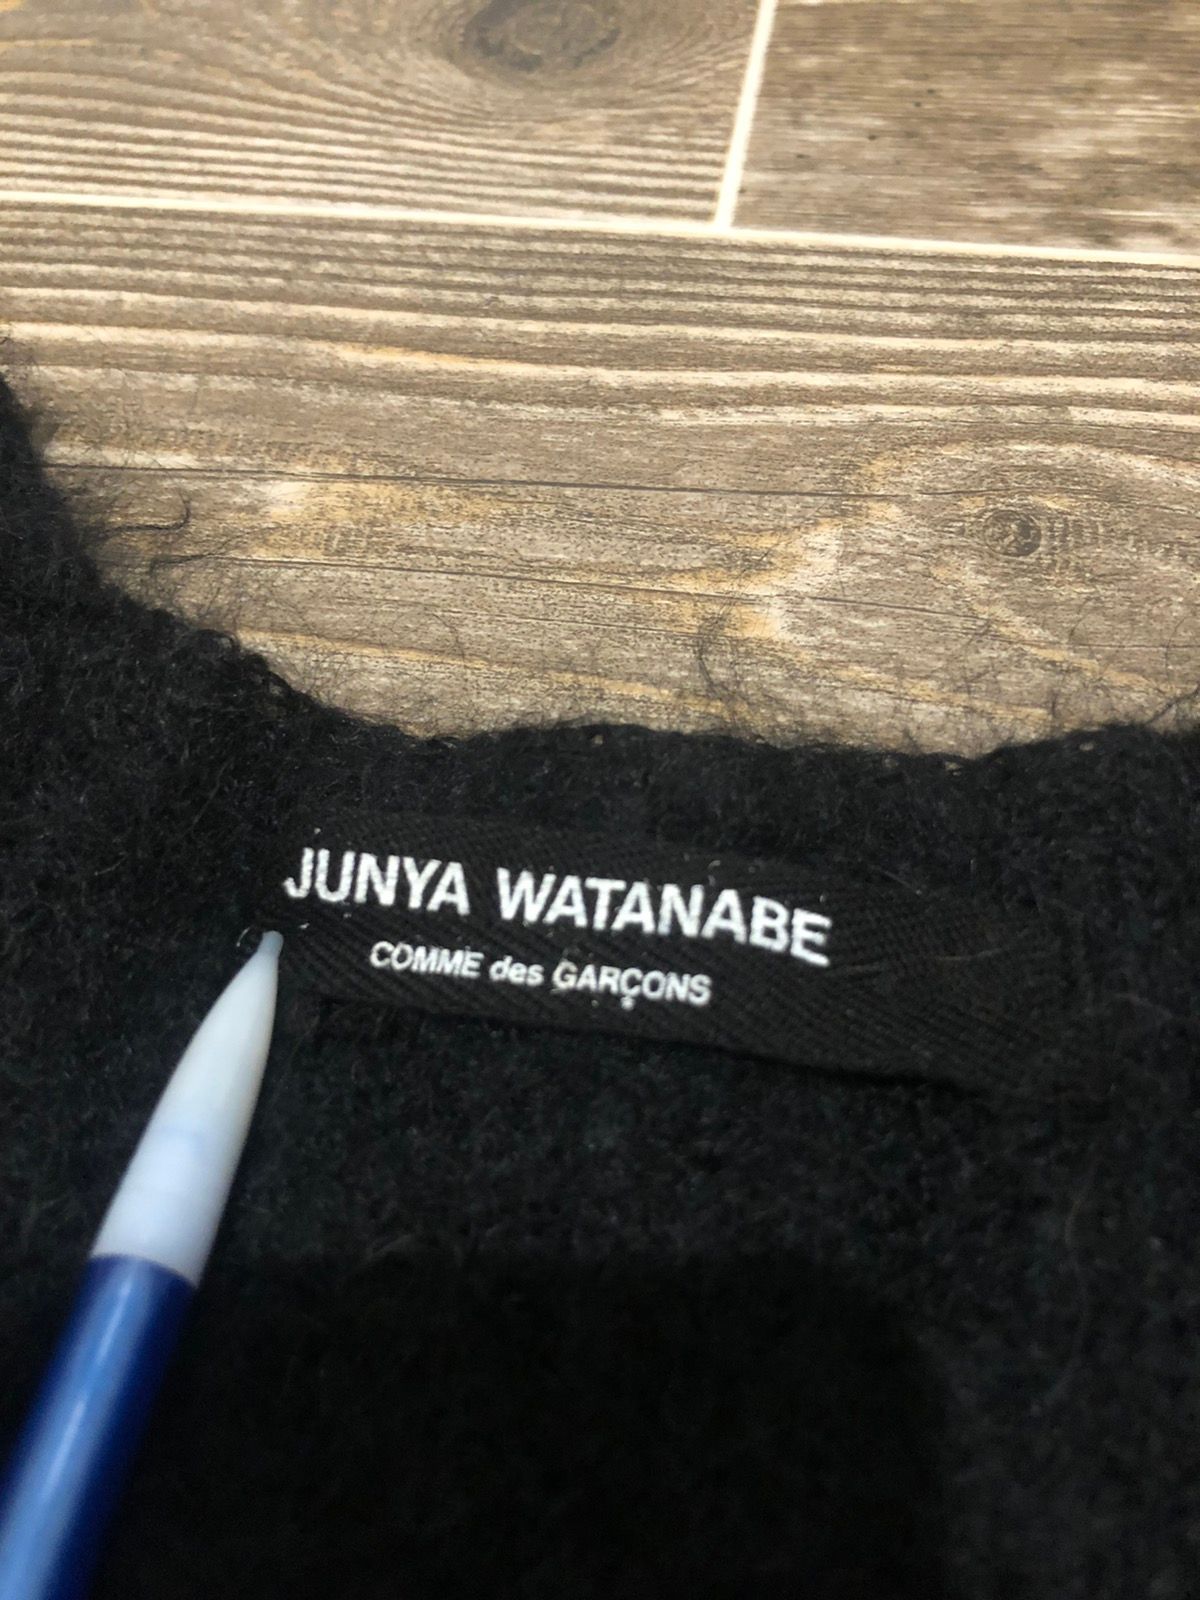 Junya Watanabe Junya Watanabe AW95 “X” Cross Mohair Knit sweater Size US M / EU 48-50 / 2 - 4 Thumbnail